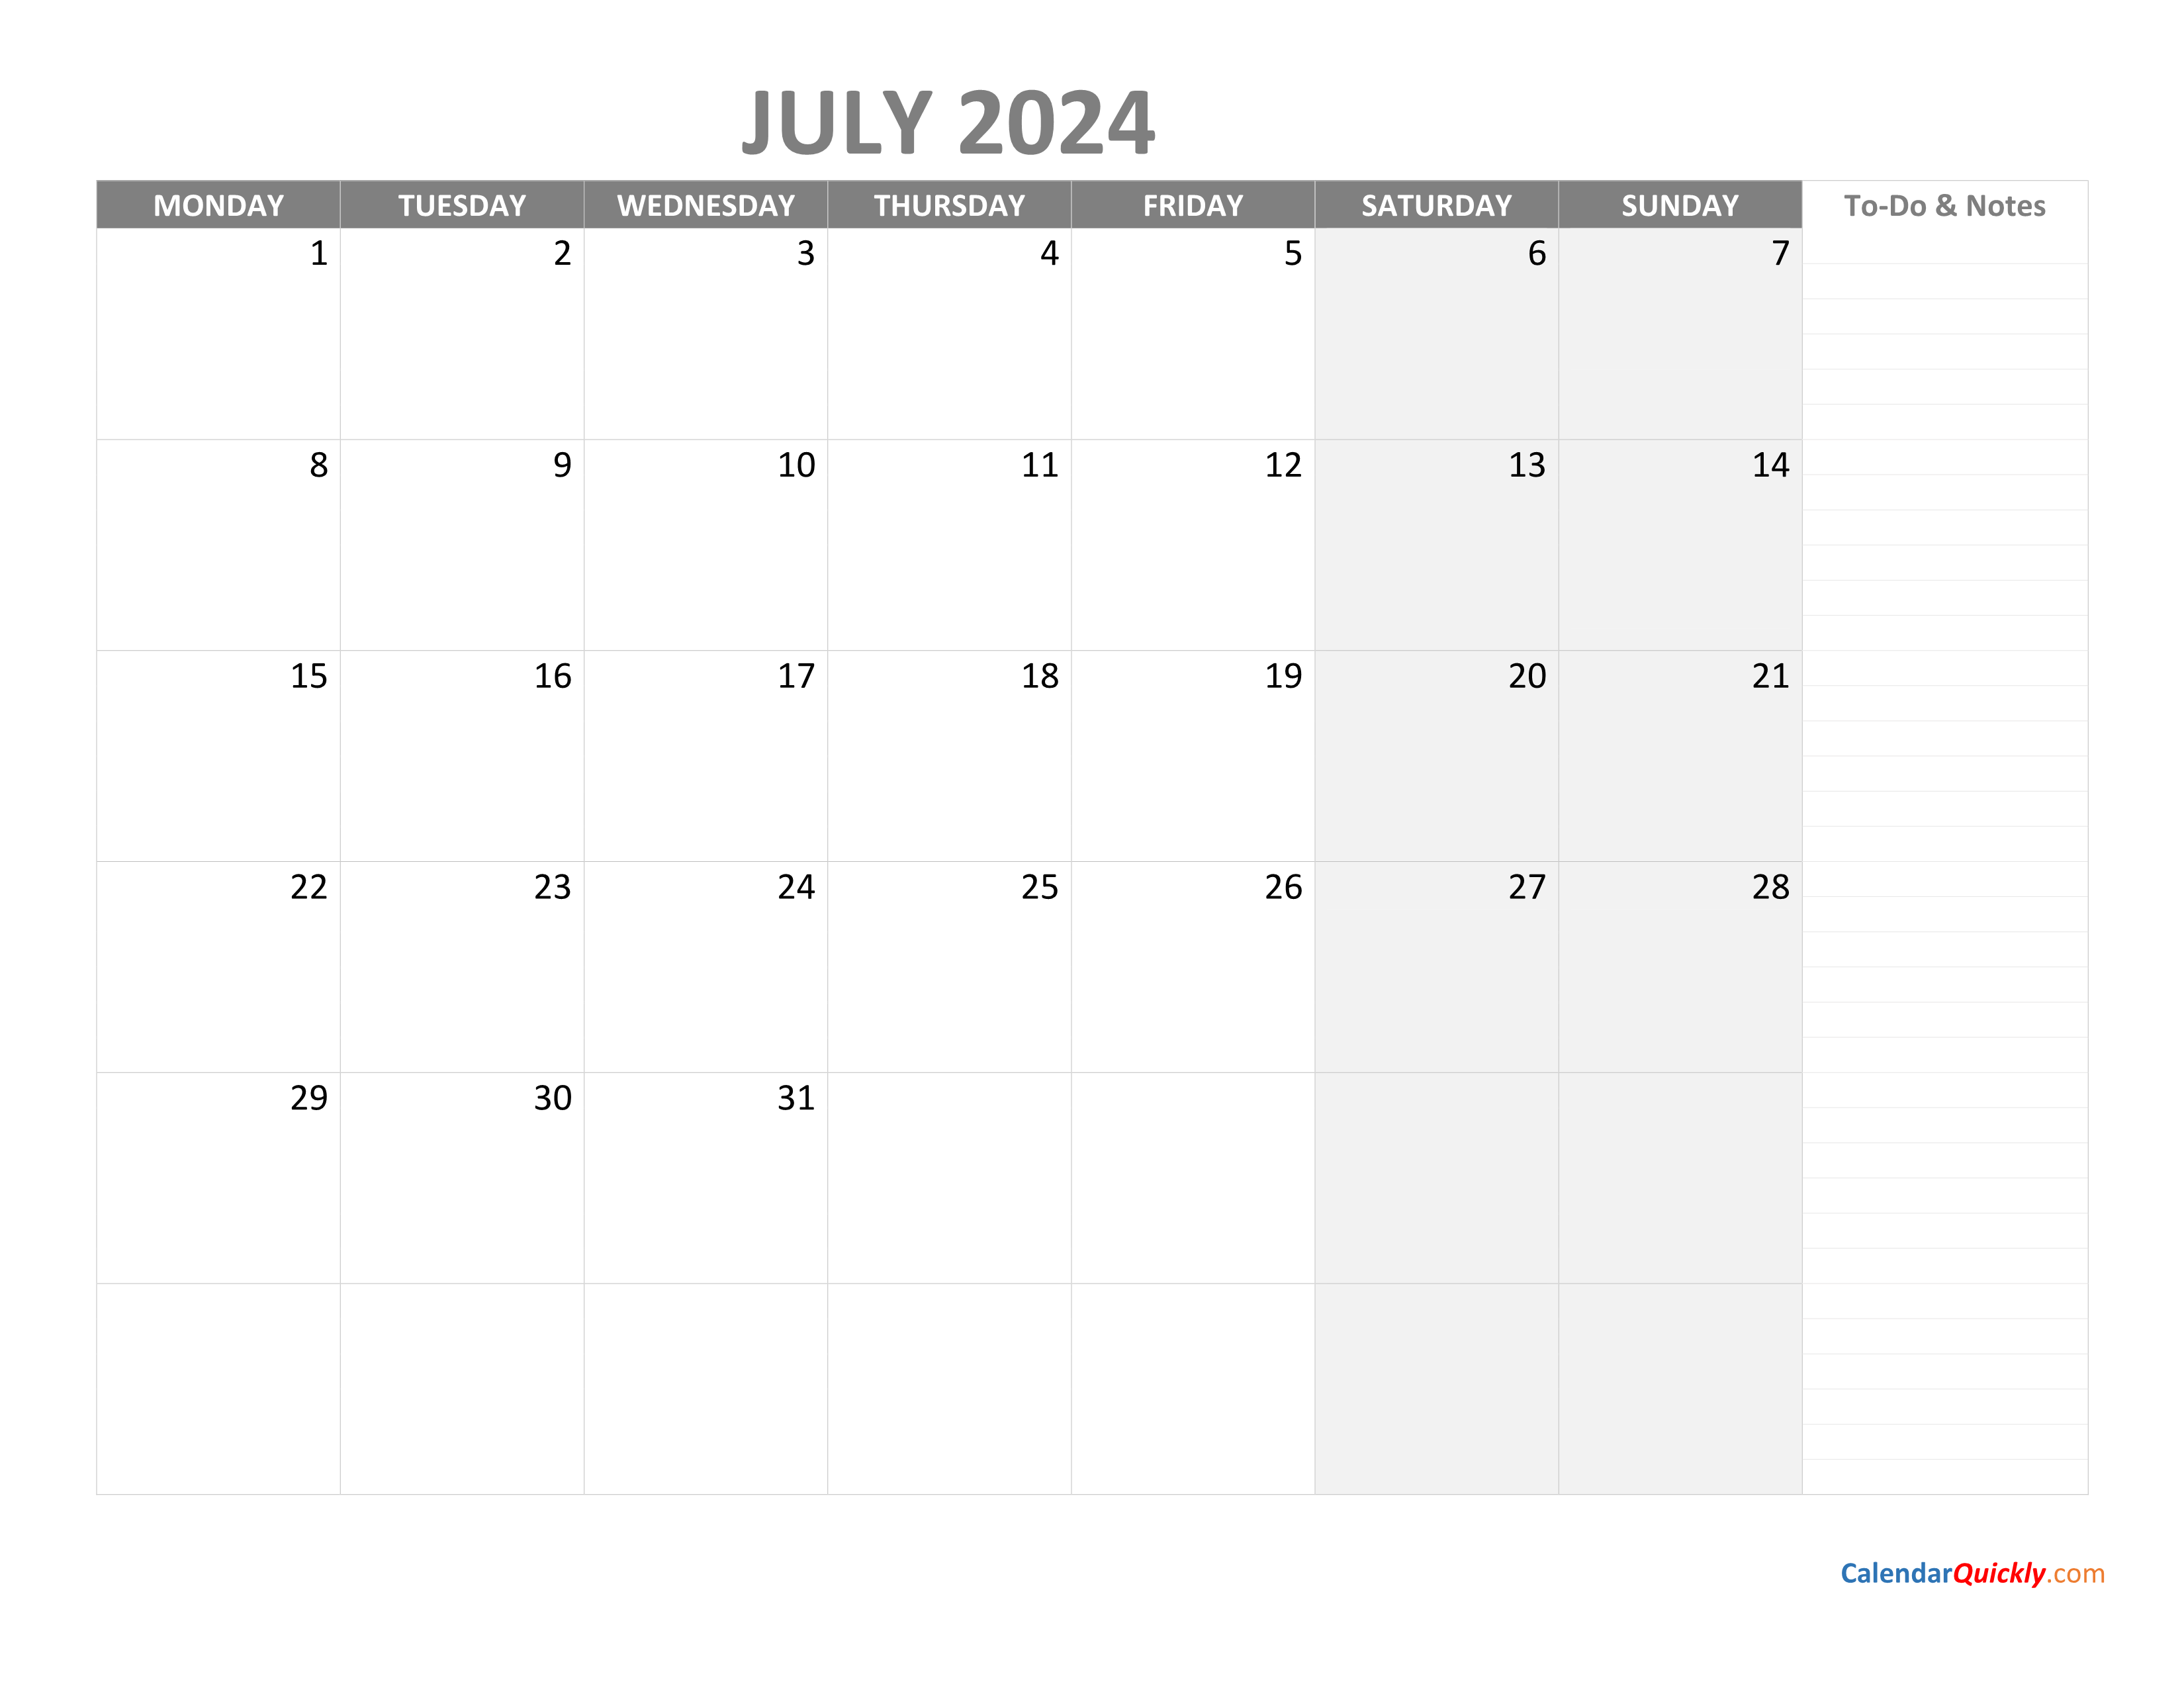 july-monday-calendar-2024-with-notes-calendar-quickly